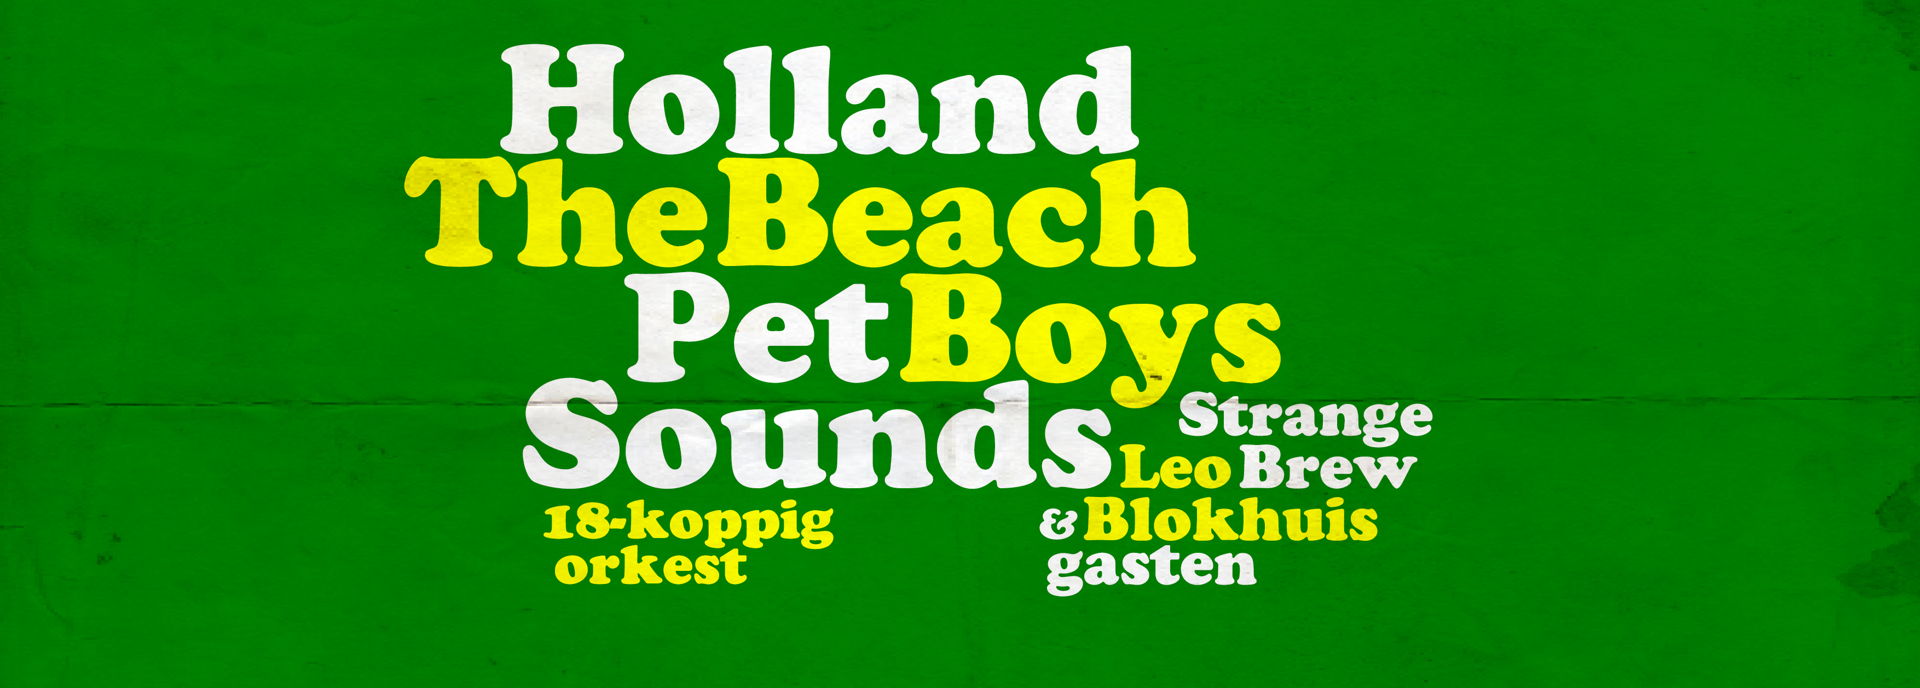 The Beach Boys: Pet Sounds & Holland - live - Strange Brew, Leo Blokhuis & gasten  - 2023 in De Tamboer